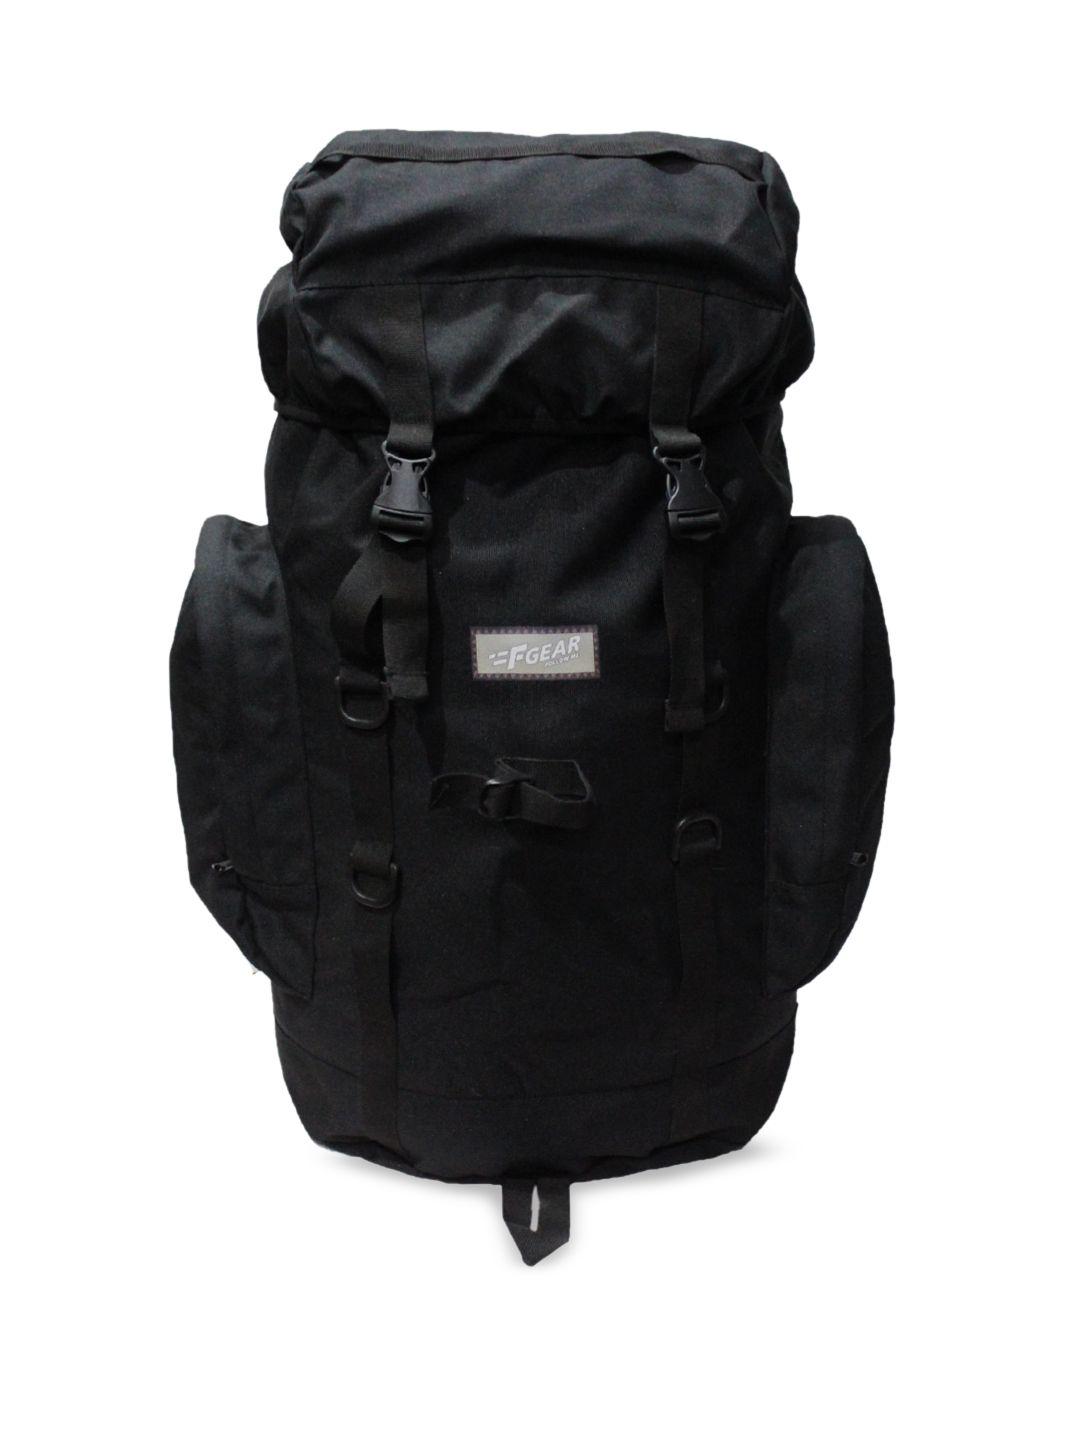 f gear unisex black solid rucksack